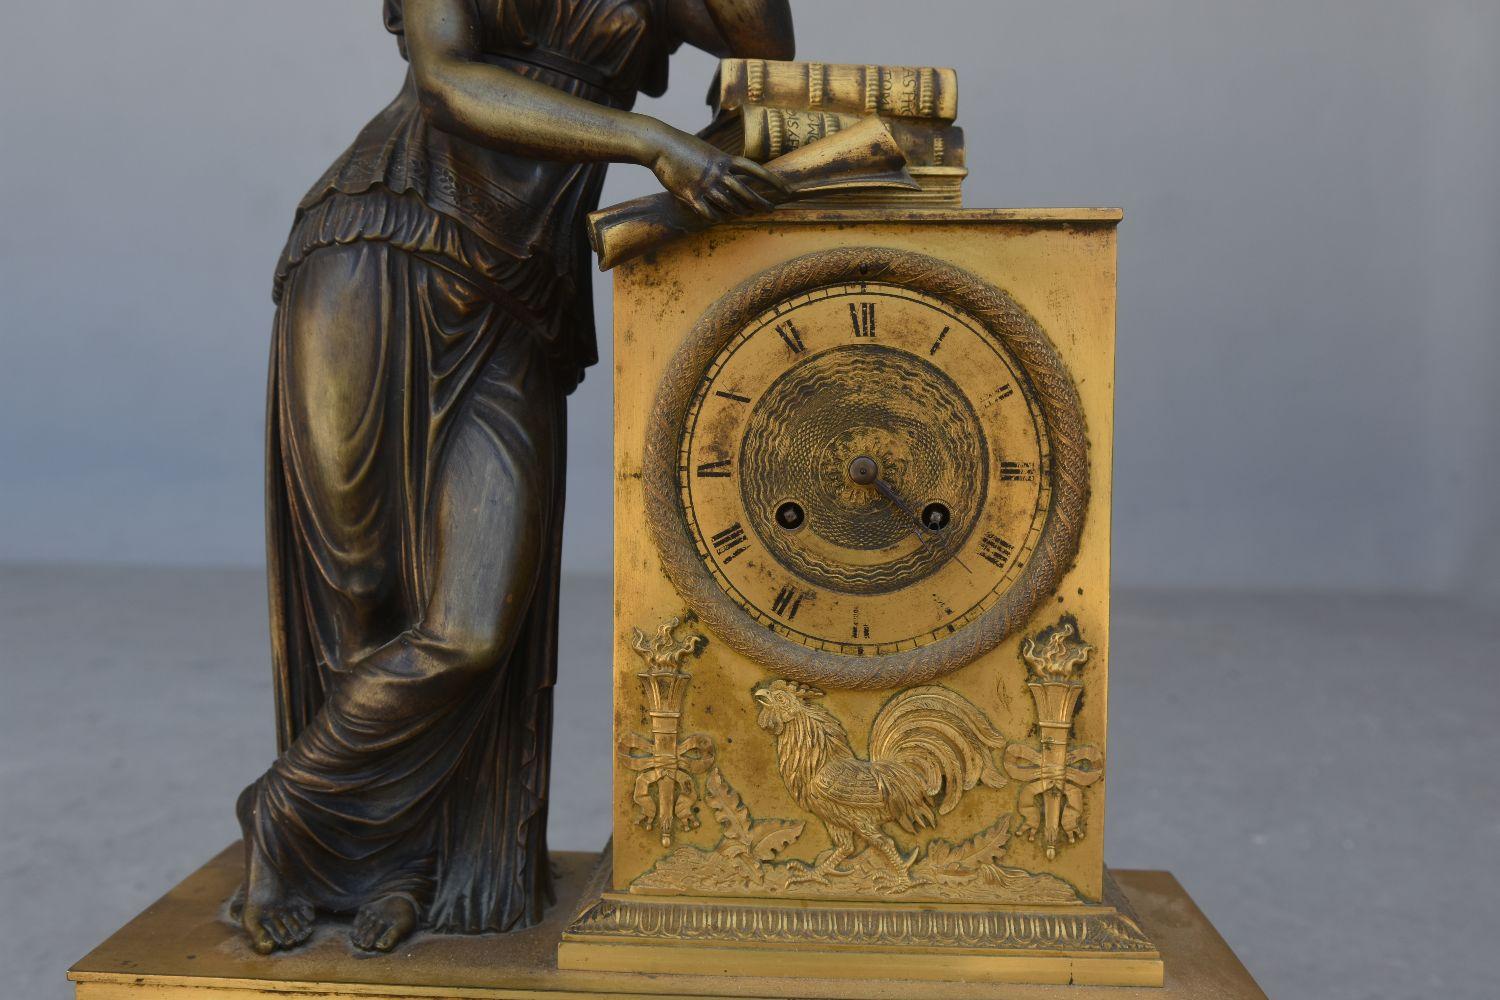 19th Century Empire Pendulum from 